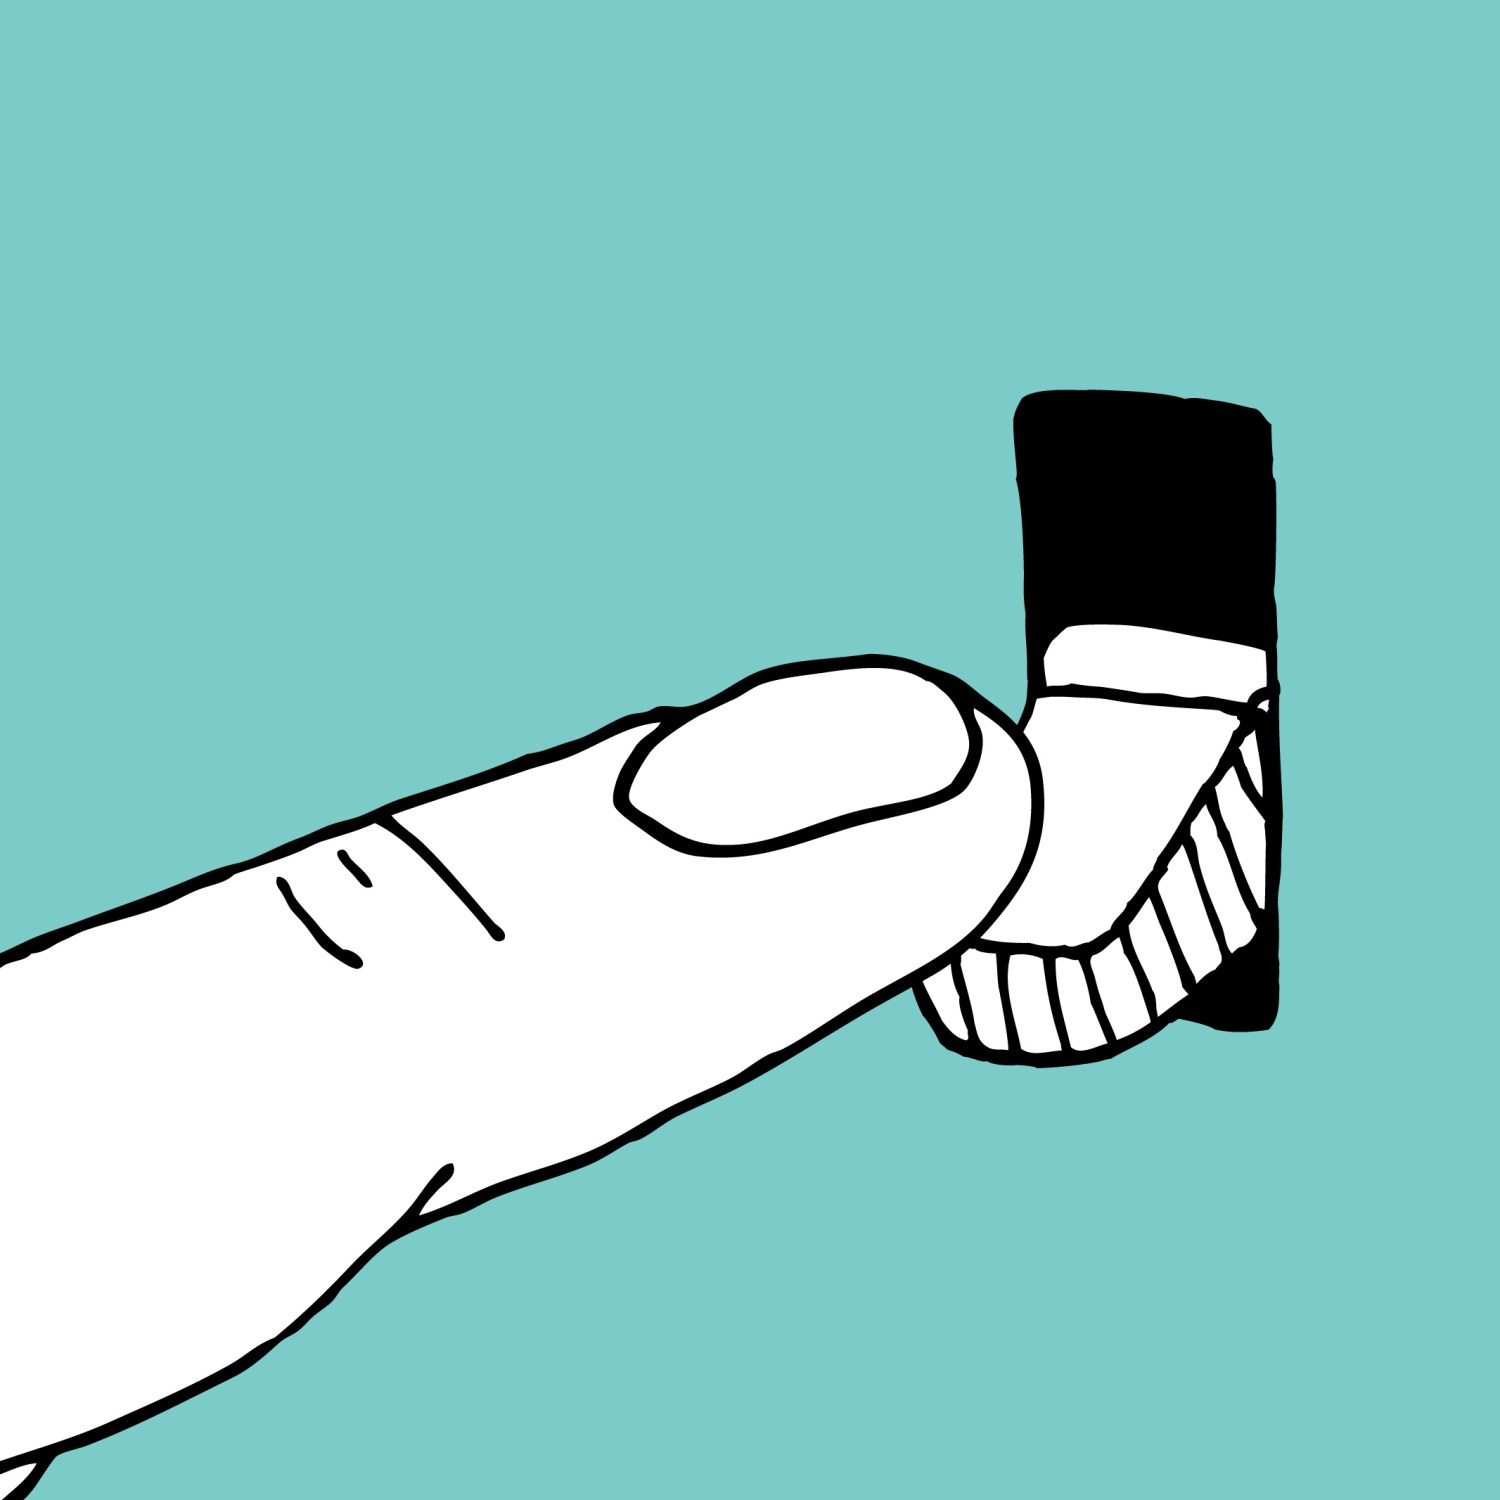 Finger flipping off a light switch illustration